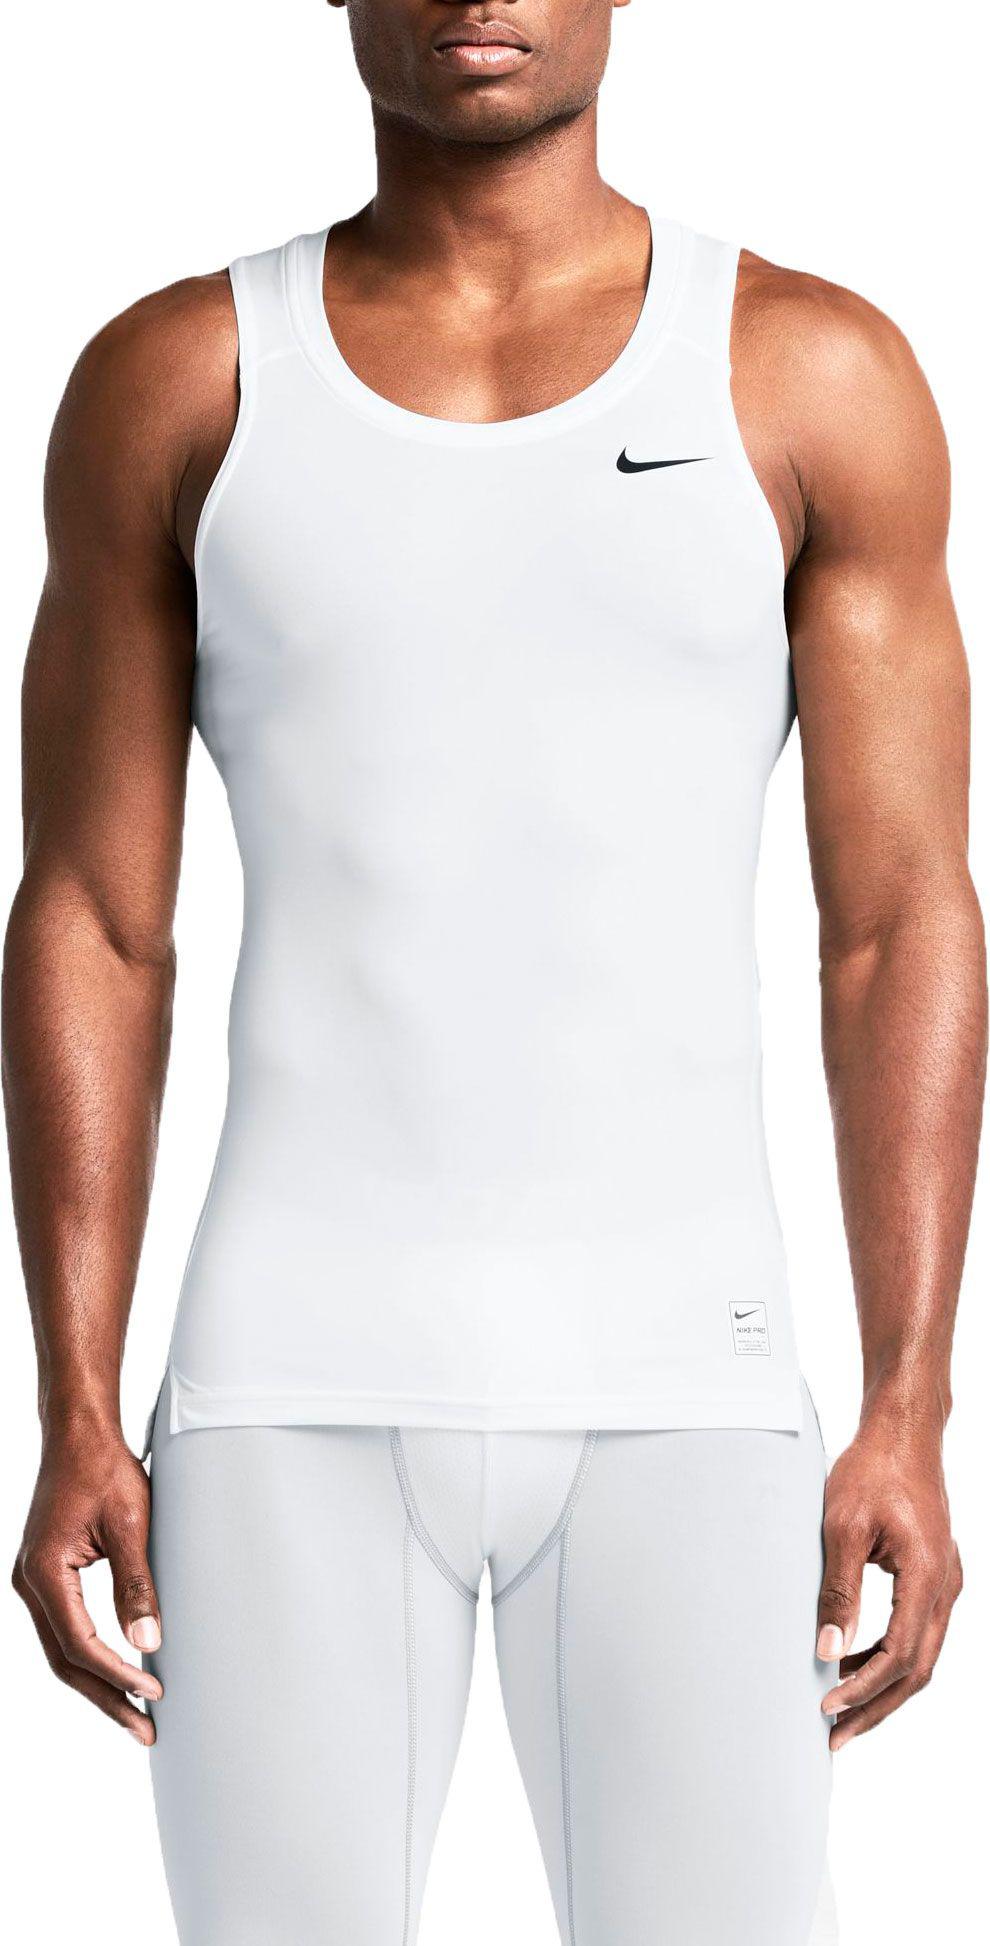 nike pro sleeveless compression shirt